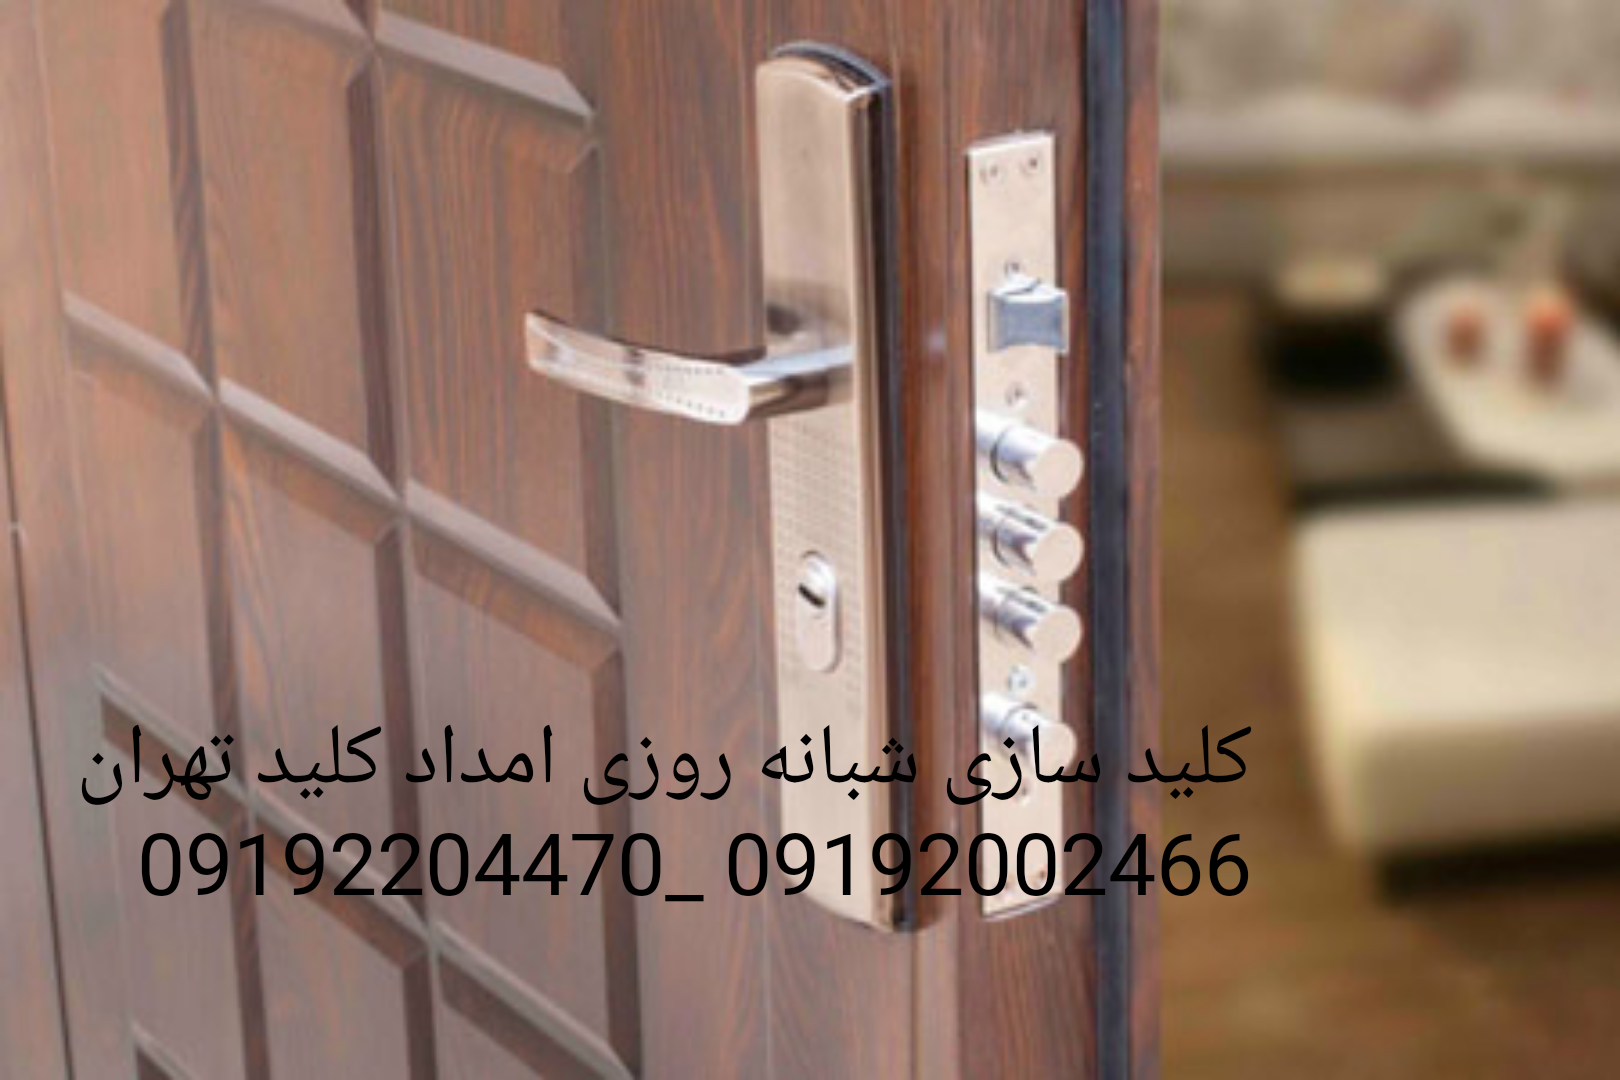 کلید سازي امداد کلید تهران09192002466